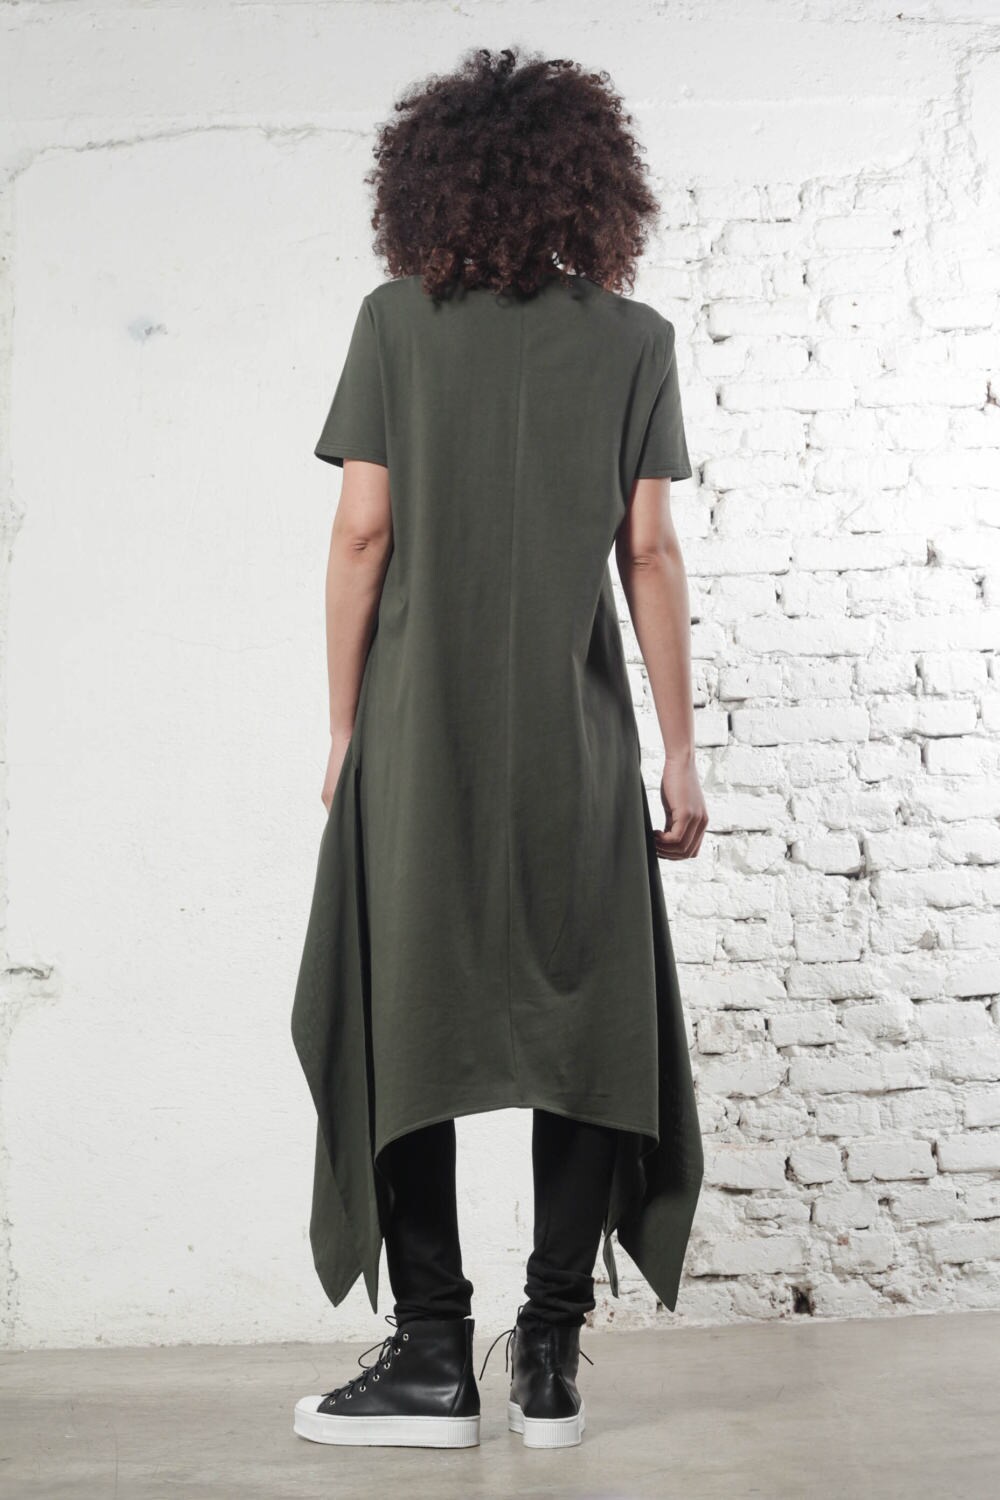 Green Dress Asymmetric Dress Party Dress Casual Dress - Etsy